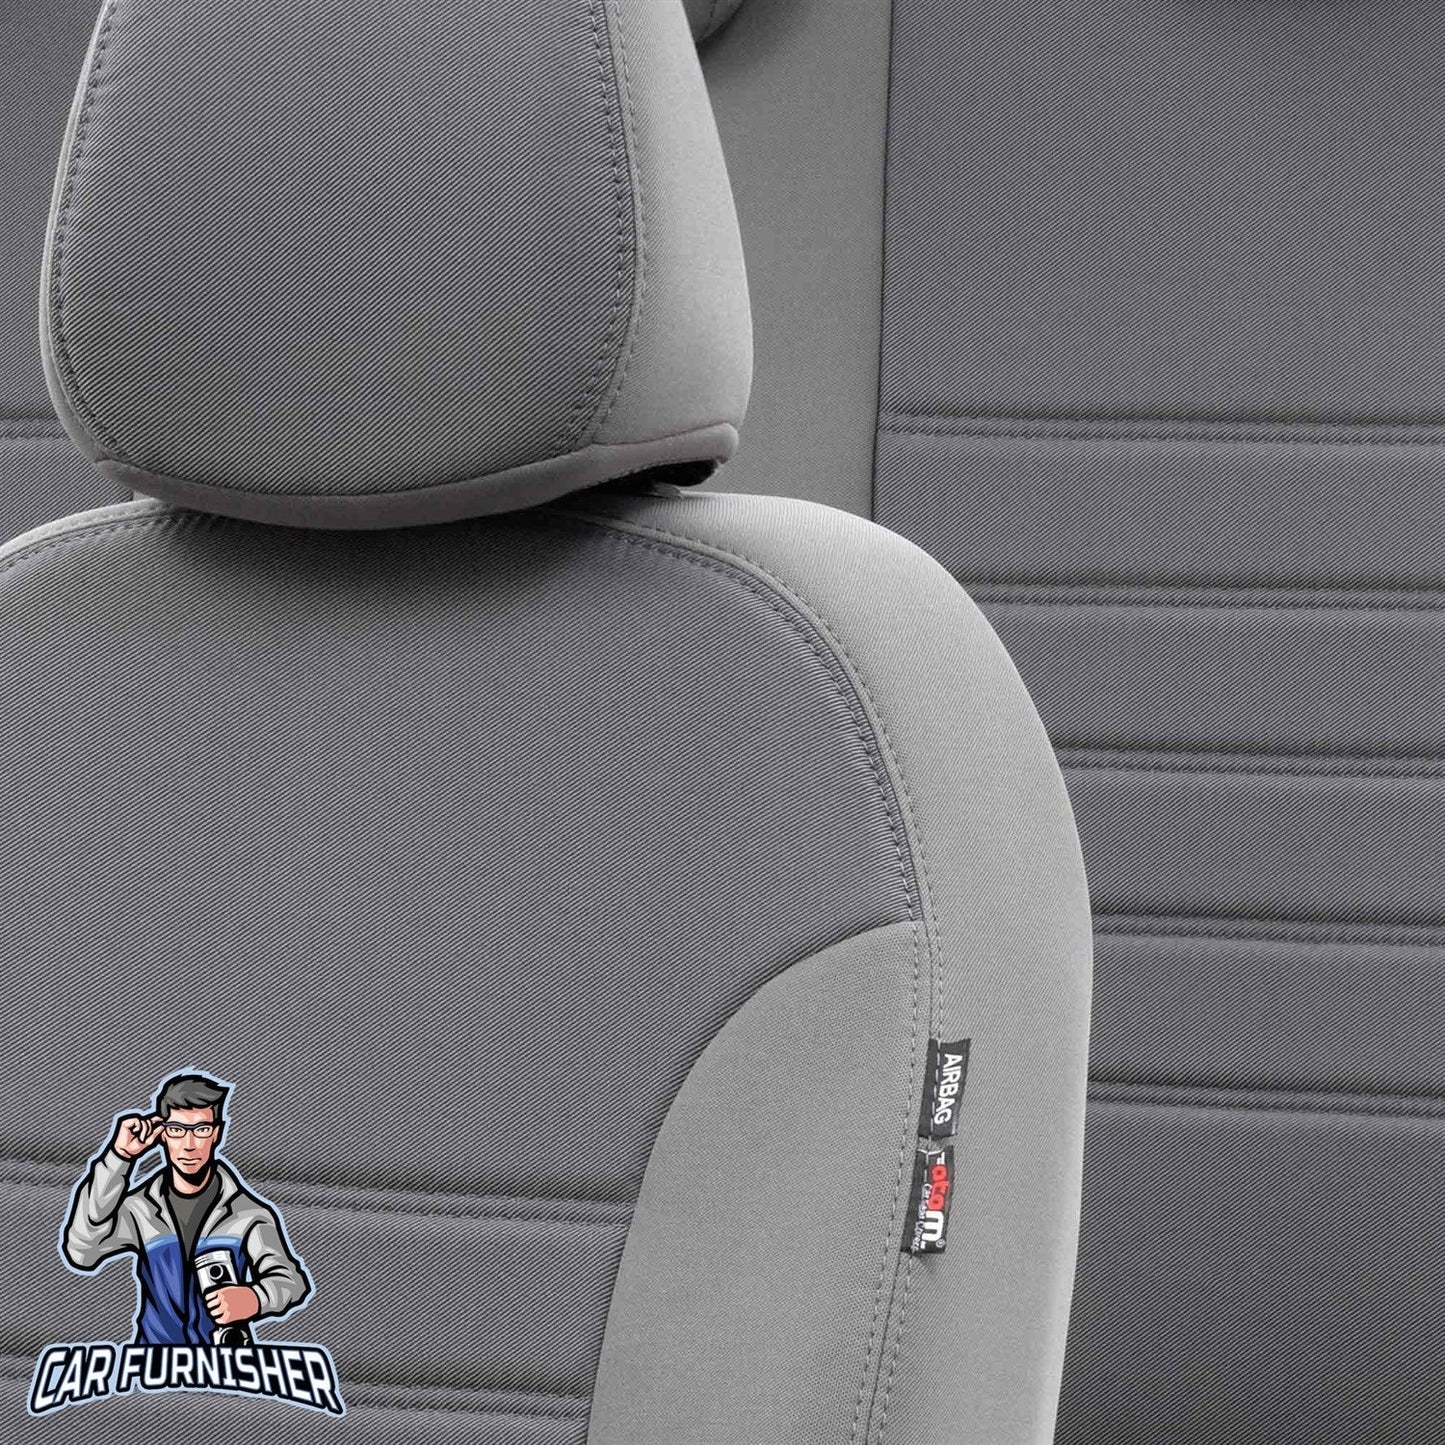 Peugeot 307 Seat Covers Original Jacquard Design Gray Jacquard Fabric